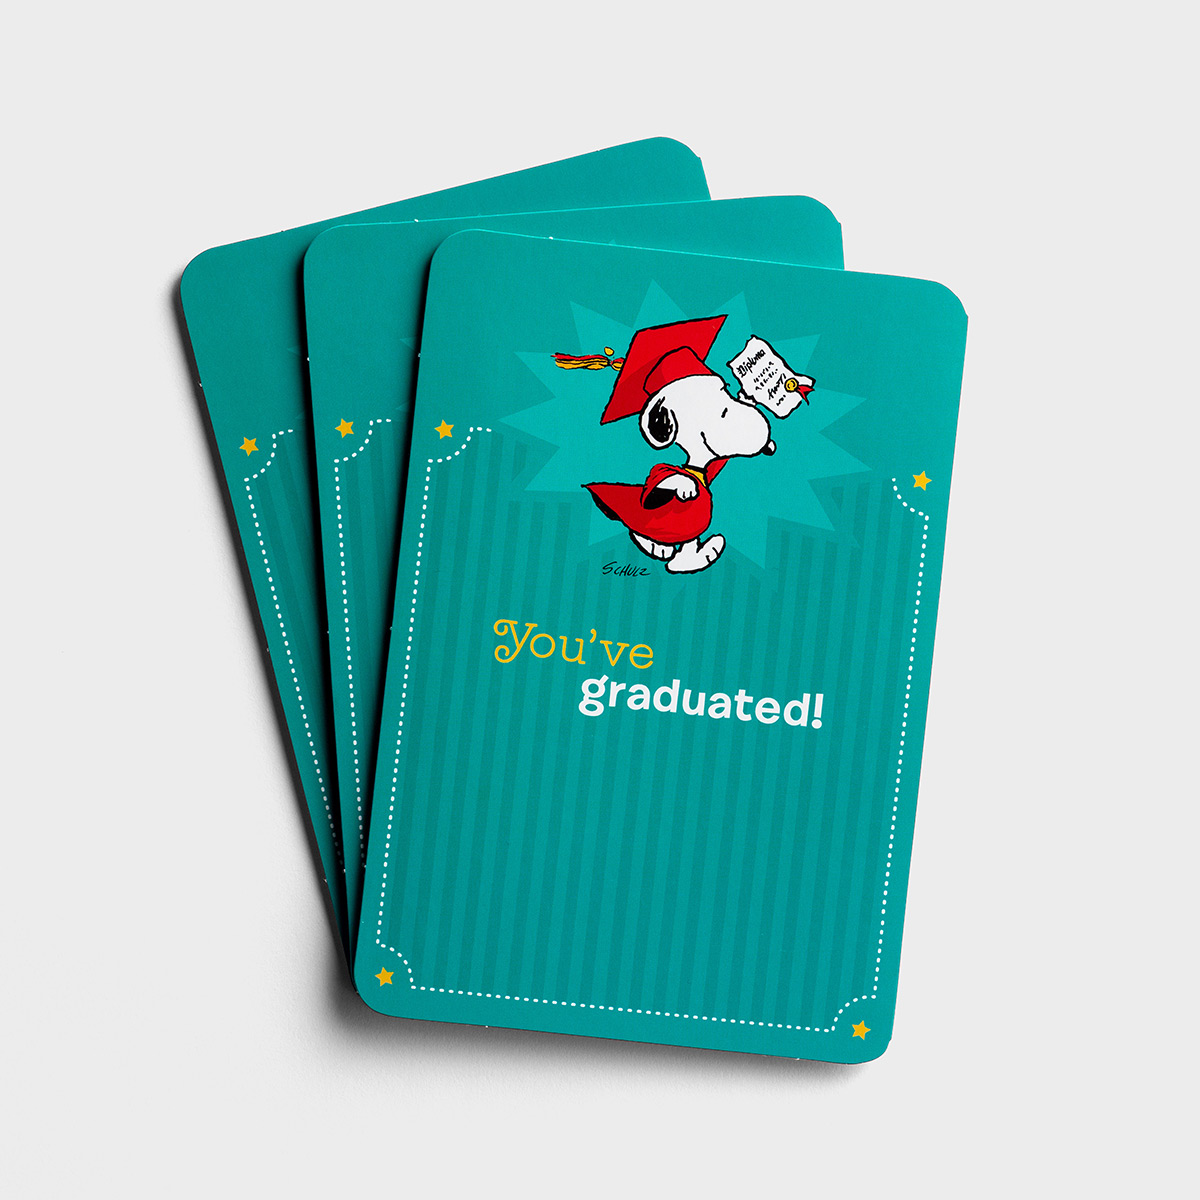 Peanuts - Graduation - Let's Celebrate - 3 Premium Cards